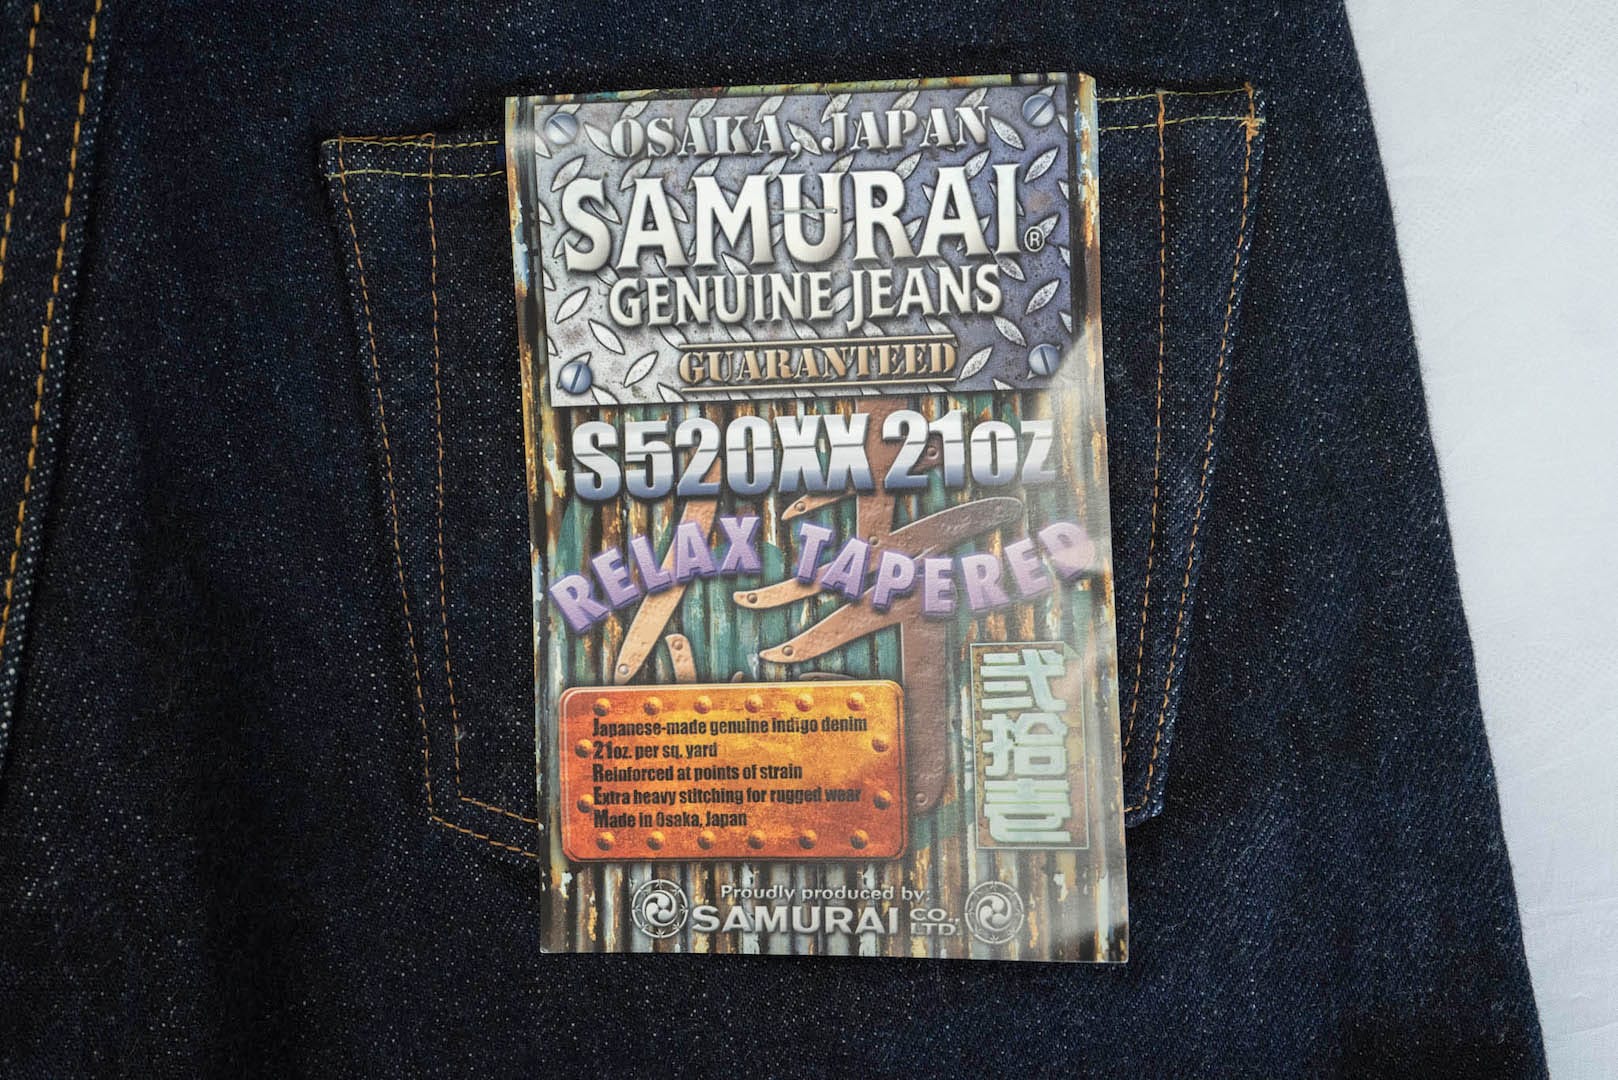 Samurai 21oz S520XX21oz "Cho-Kiwami" Denim (Regular Tapered fit)